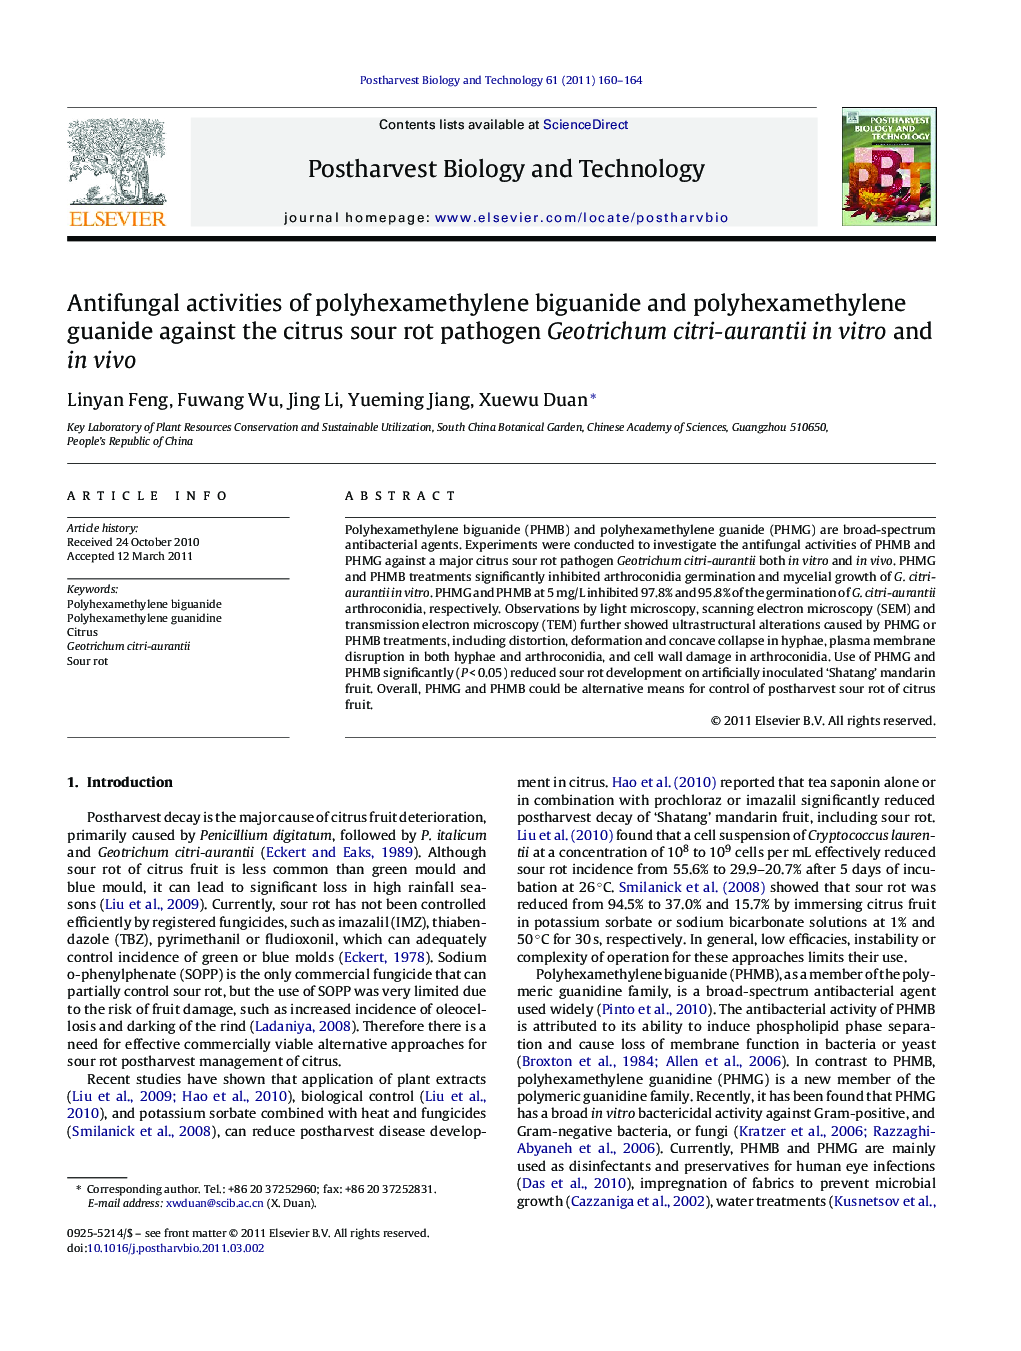 Antifungal activities of polyhexamethylene biguanide and polyhexamethylene guanide against the citrus sour rot pathogen Geotrichum citri-aurantii in vitro and in vivo